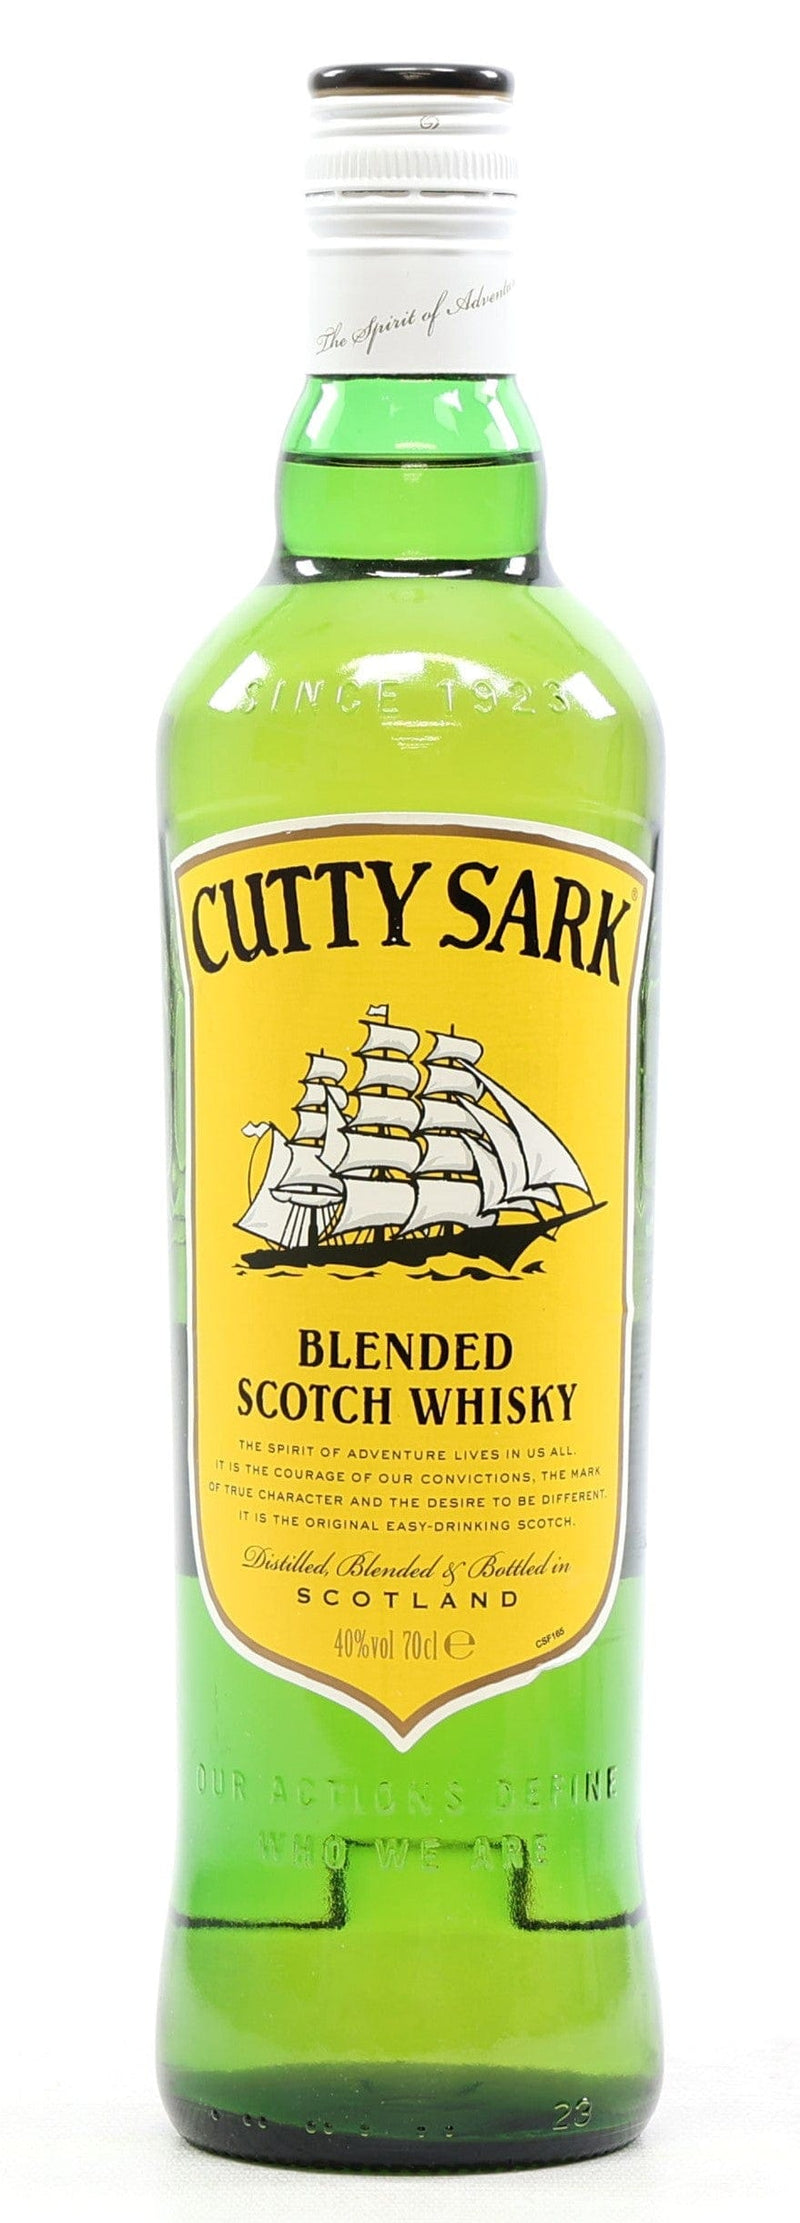 Cutty Sark Blended Scotch Whisky 70cl